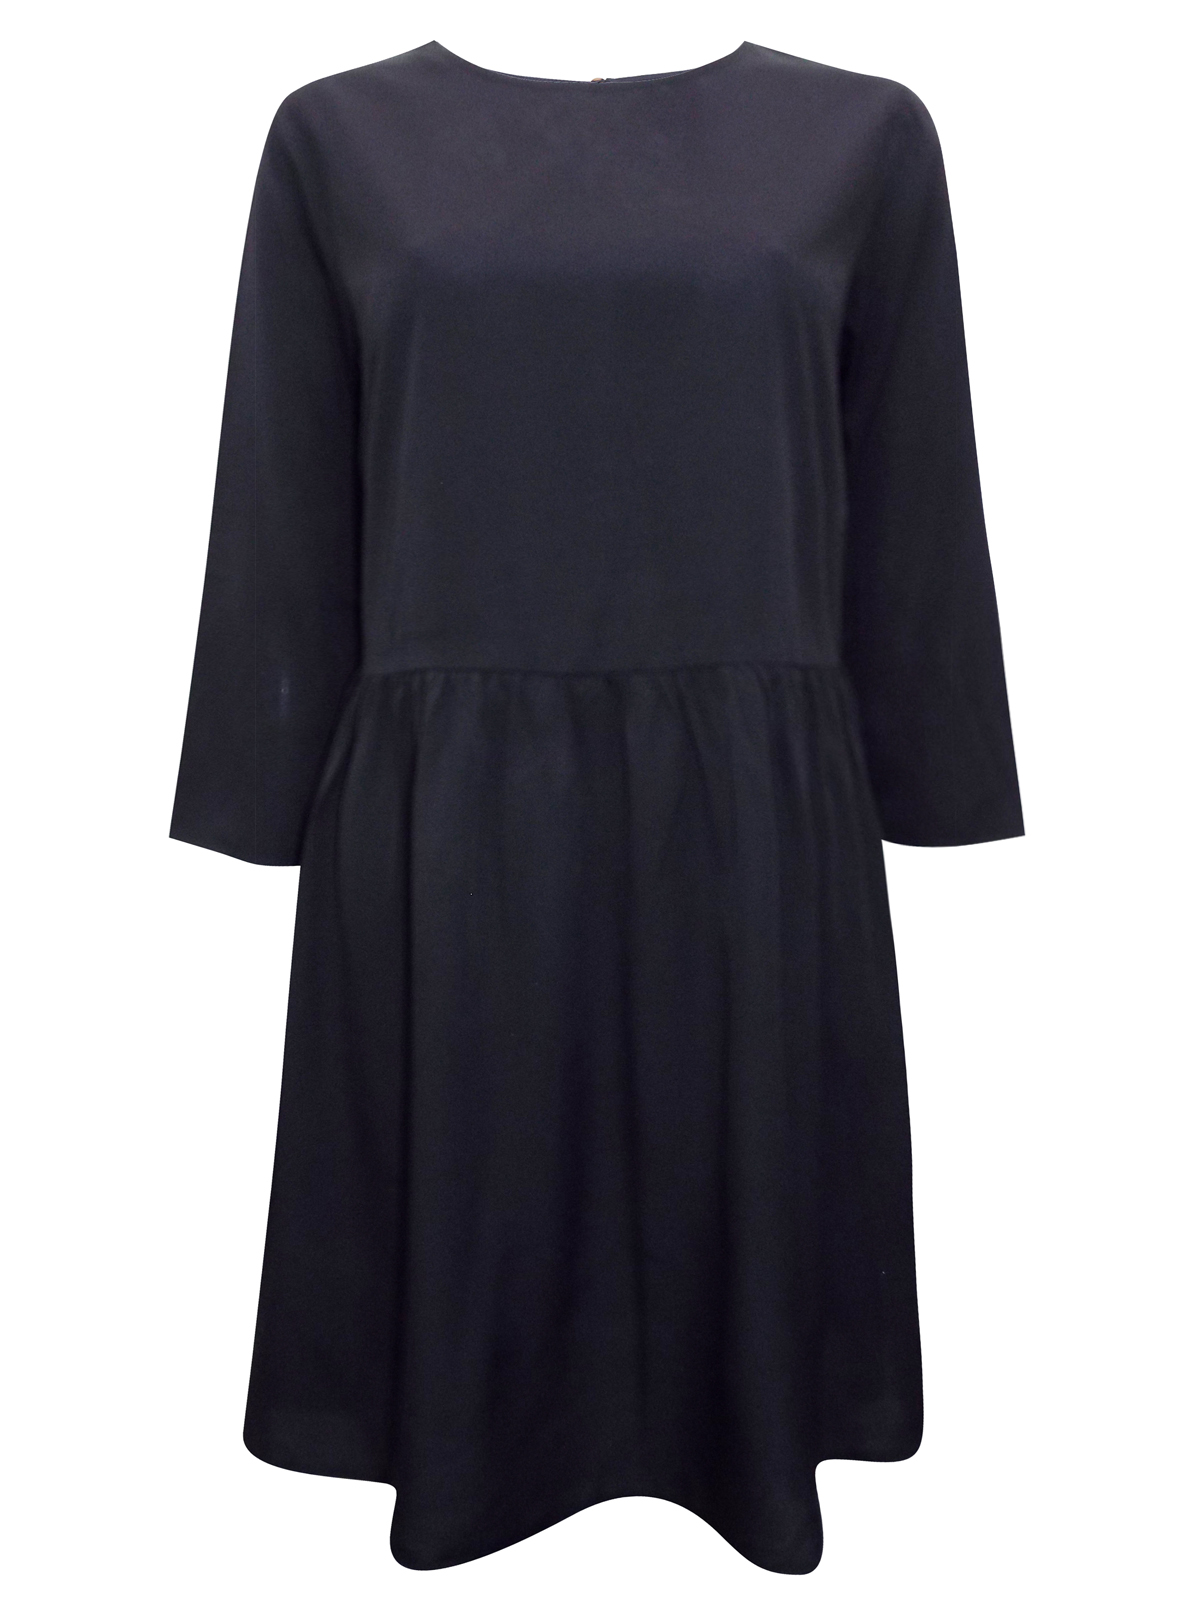 BOOHOO - - B00H00 BLACK 3/4 Sleeve Smock Dress - Size 6 to 14